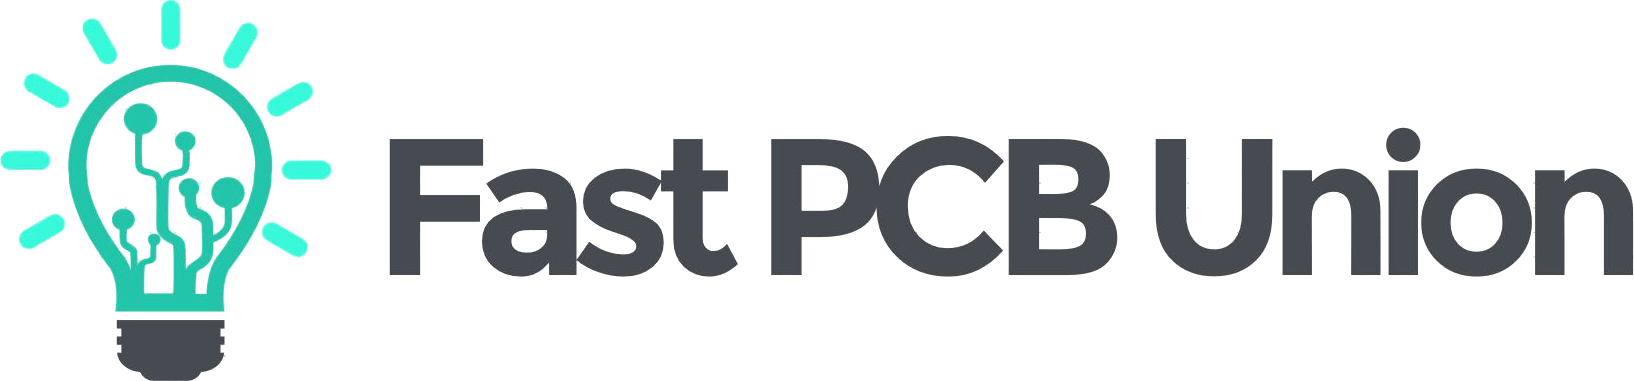 Fast PCB Union - LED PCB & MCPCB Manufacturer